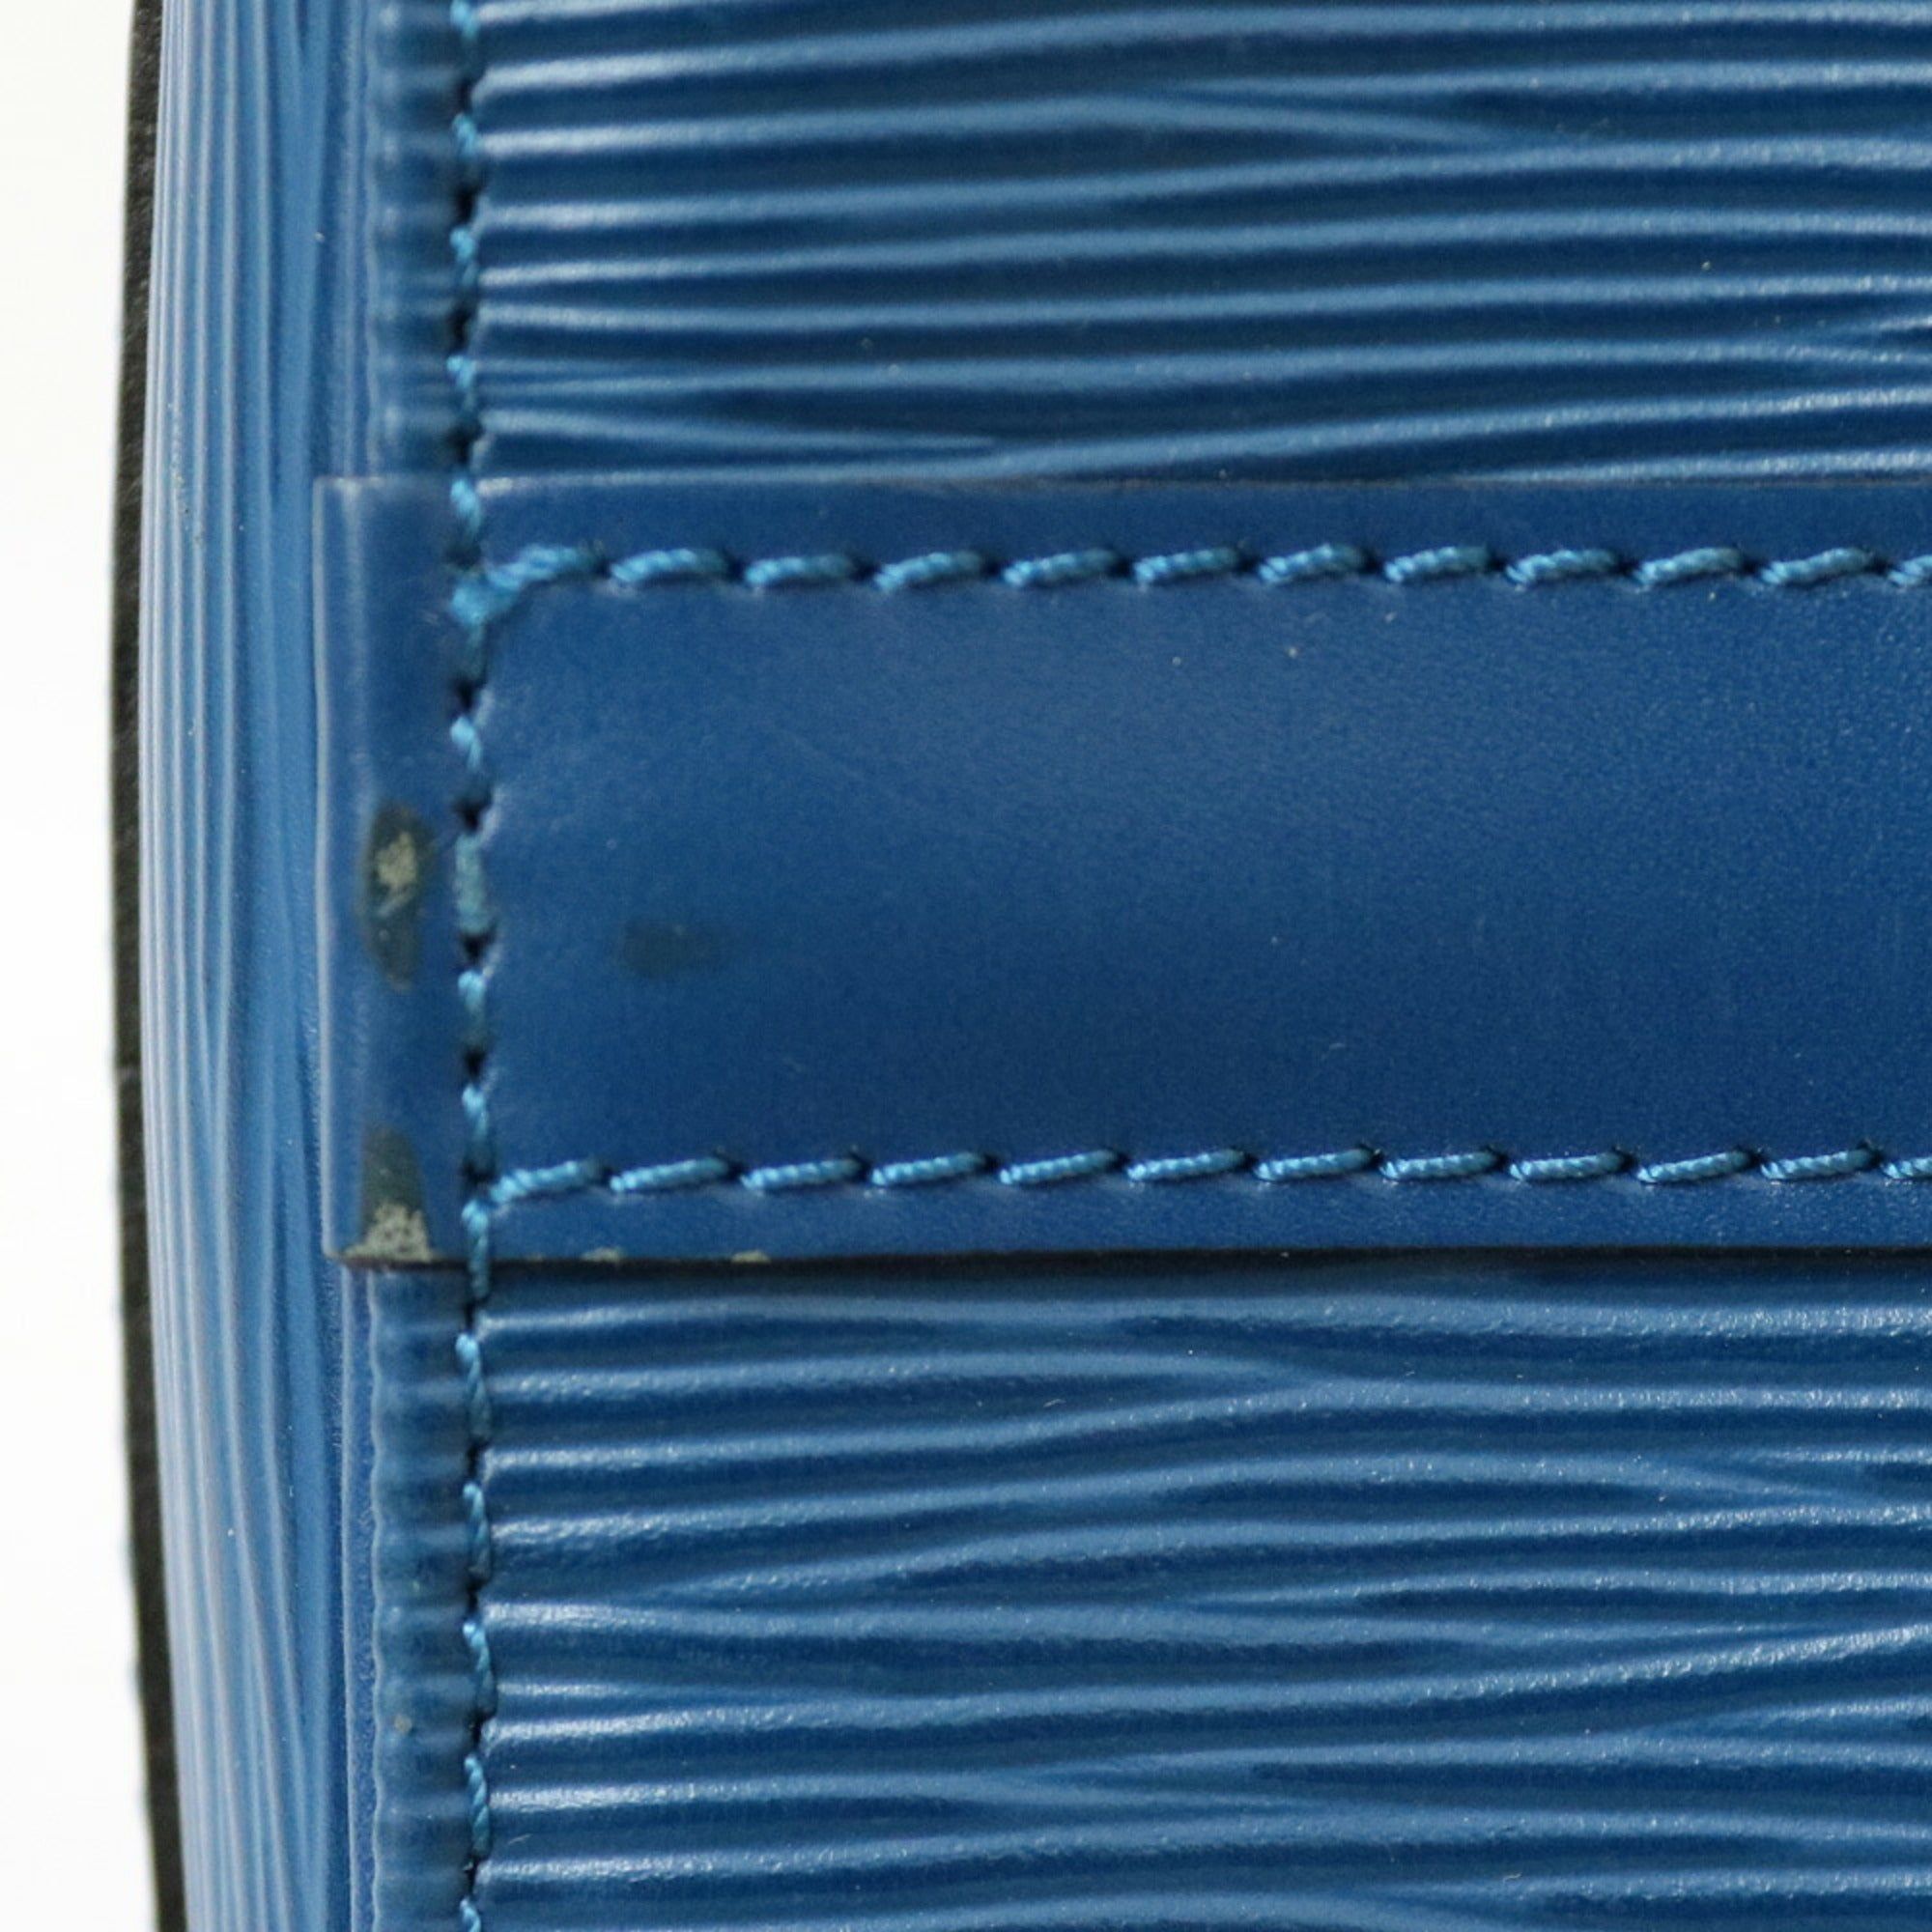 LOUIS VUITTON Handbag M43005 Speedy 30 Epi Leather blue Women Used